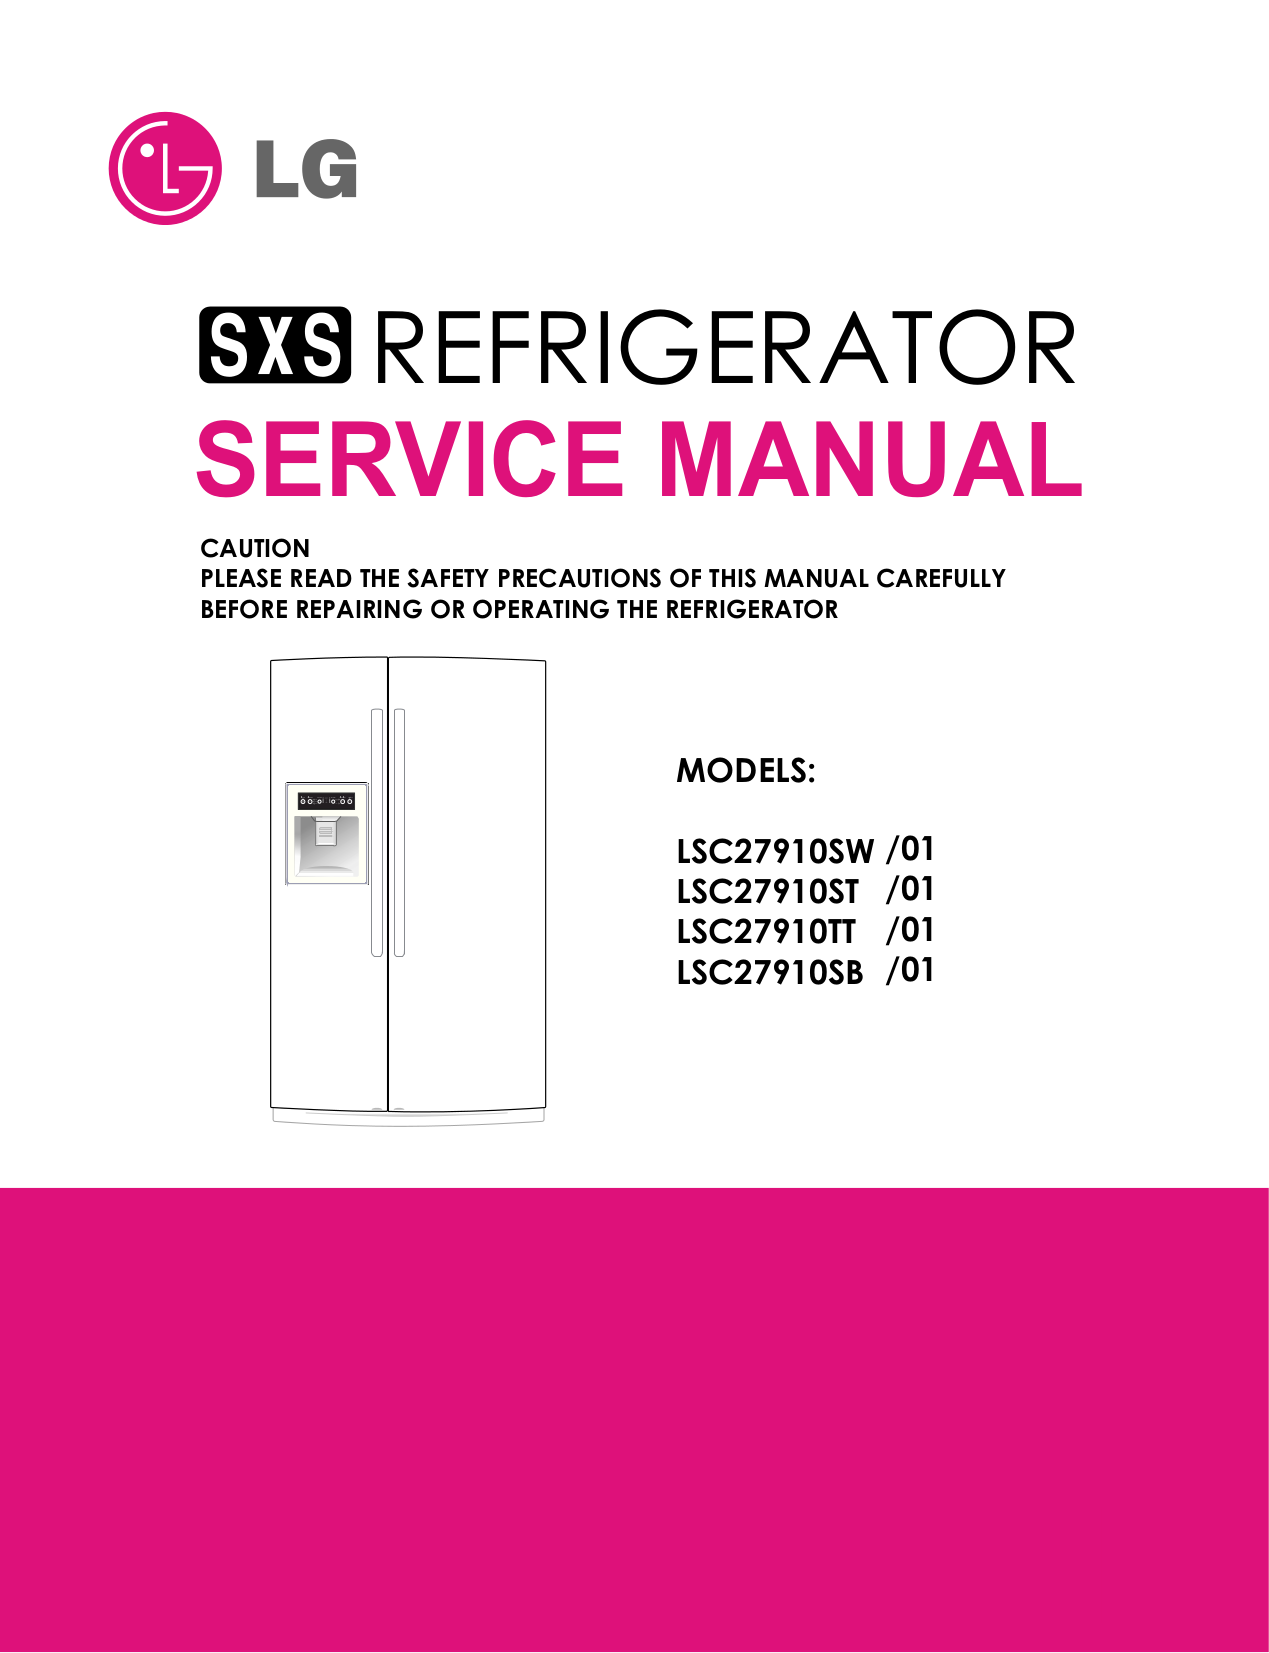 Download free pdf for LG LSC27910TT Refrigerator manual